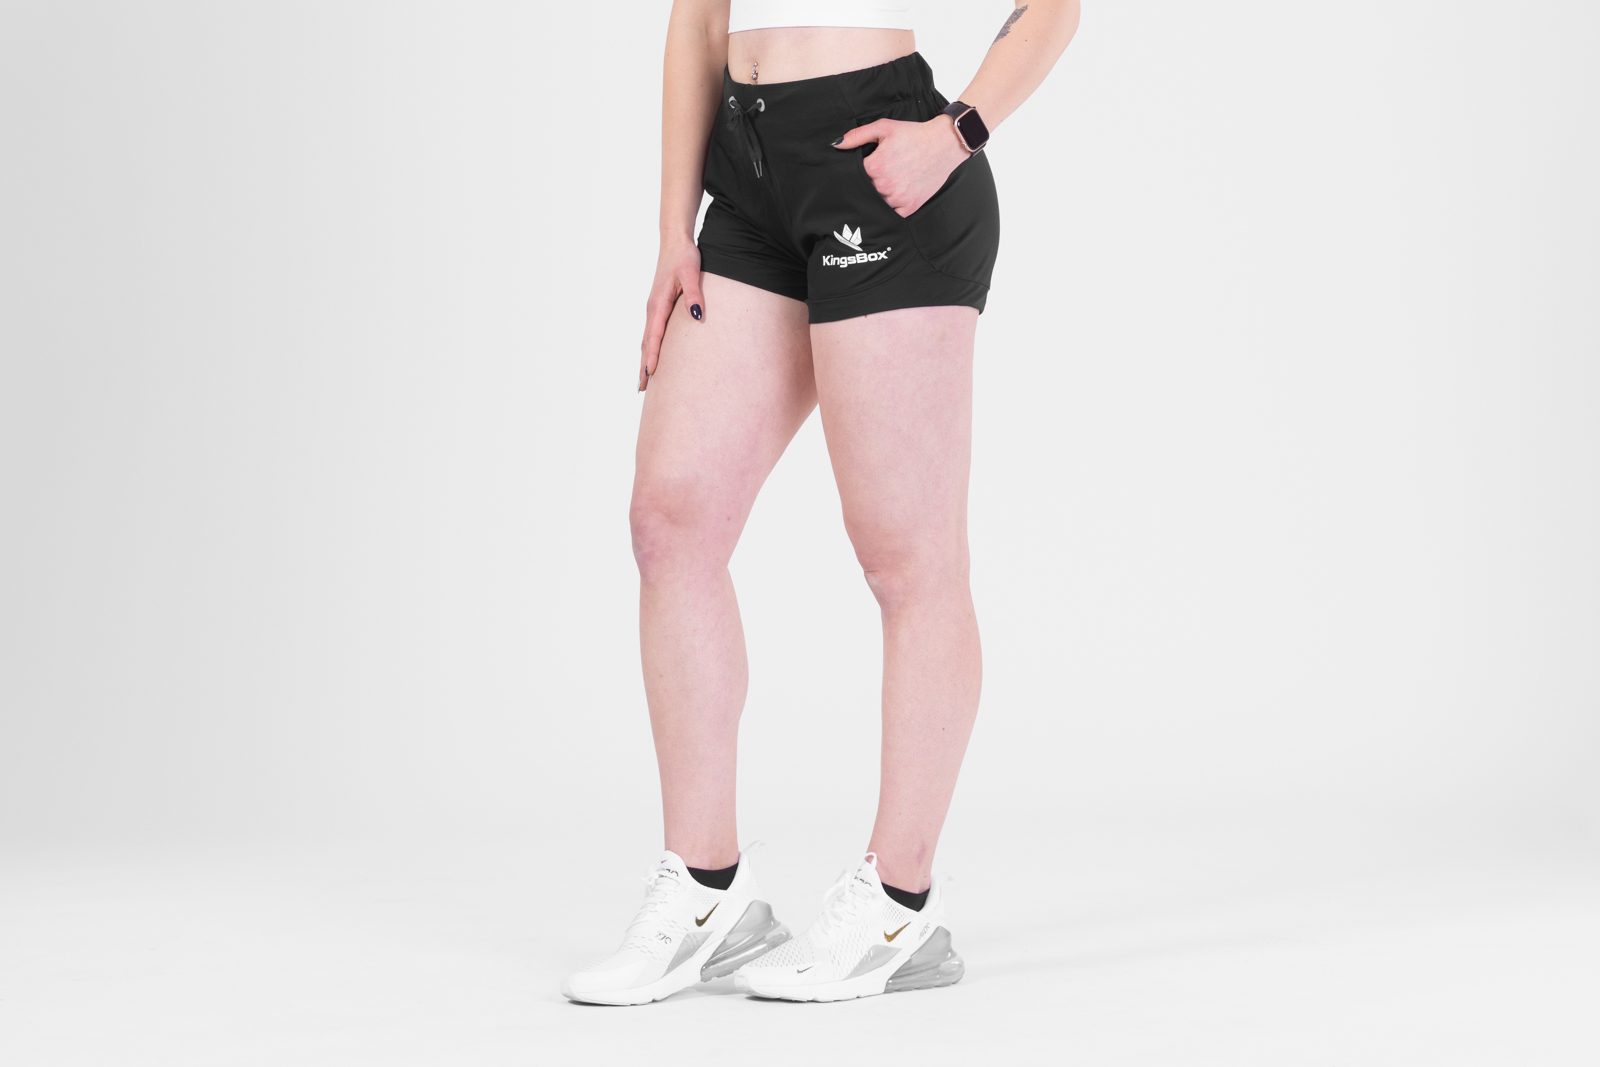 KingsBox Womens Workout Shorts - Black XS